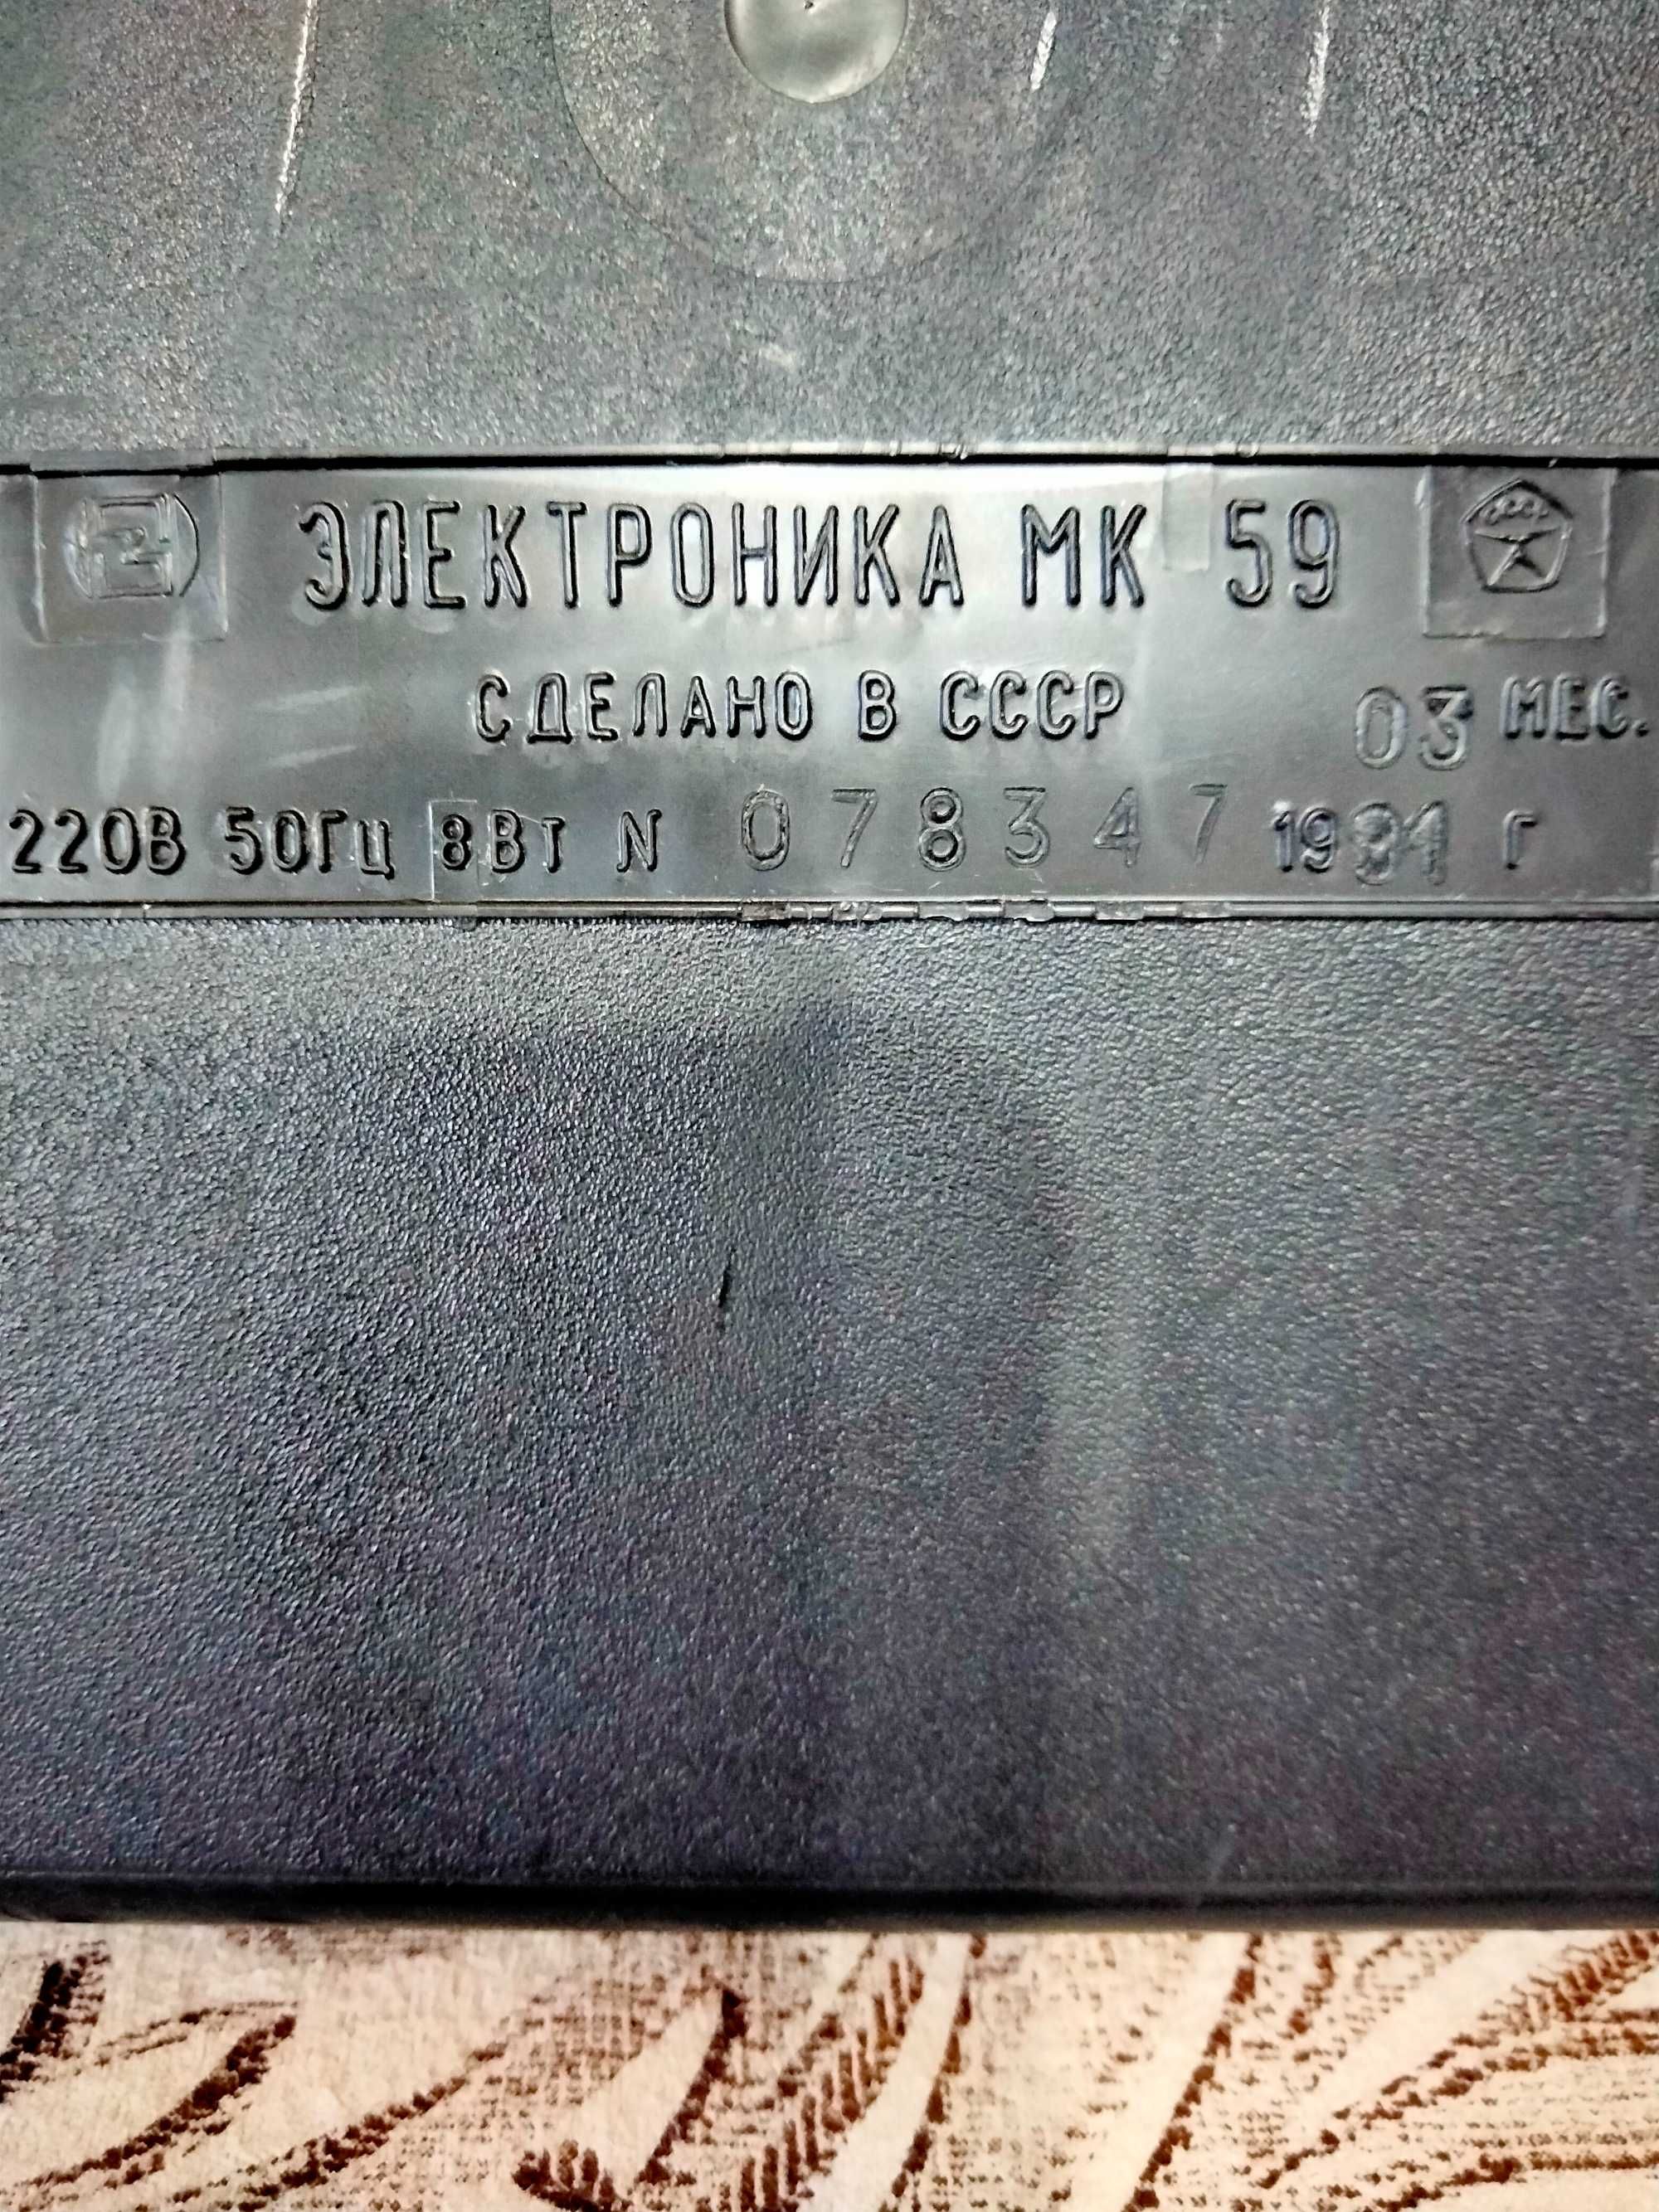 Продаётся калькулятор советских времен,Электроника  -МК 59